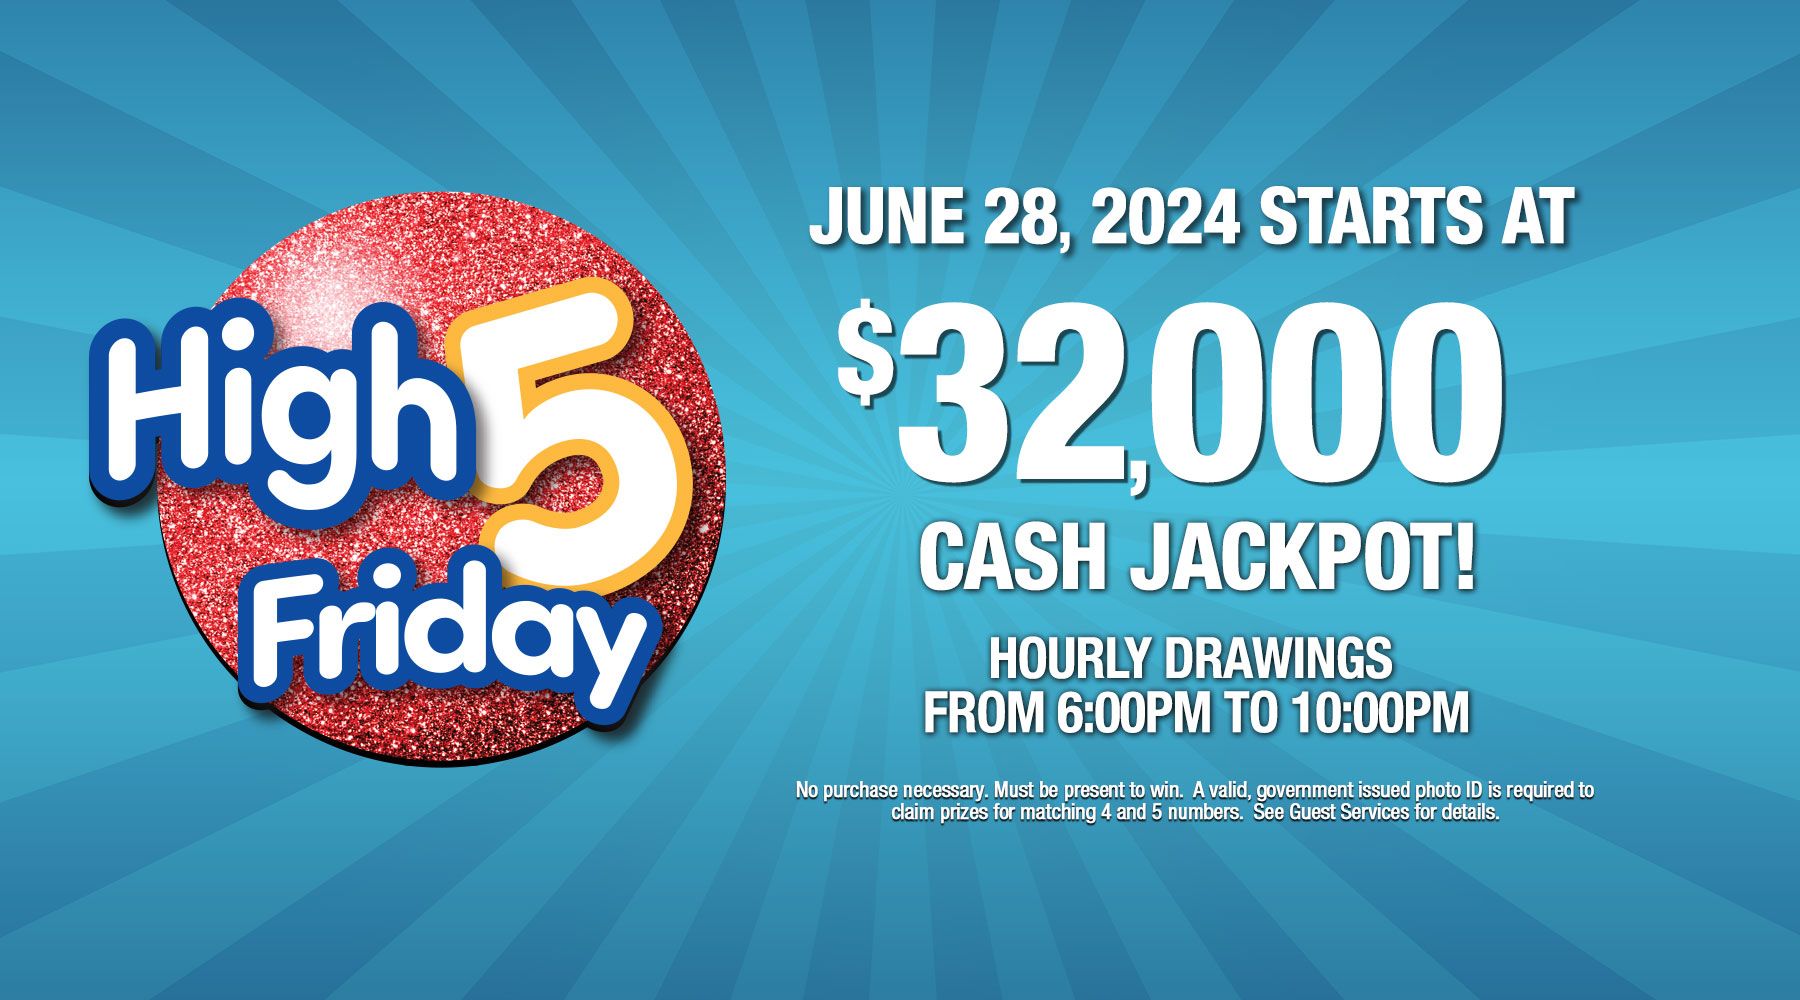 High 5 Friday CASH jackpot starts at $32,000 on Friday June 28, 2024